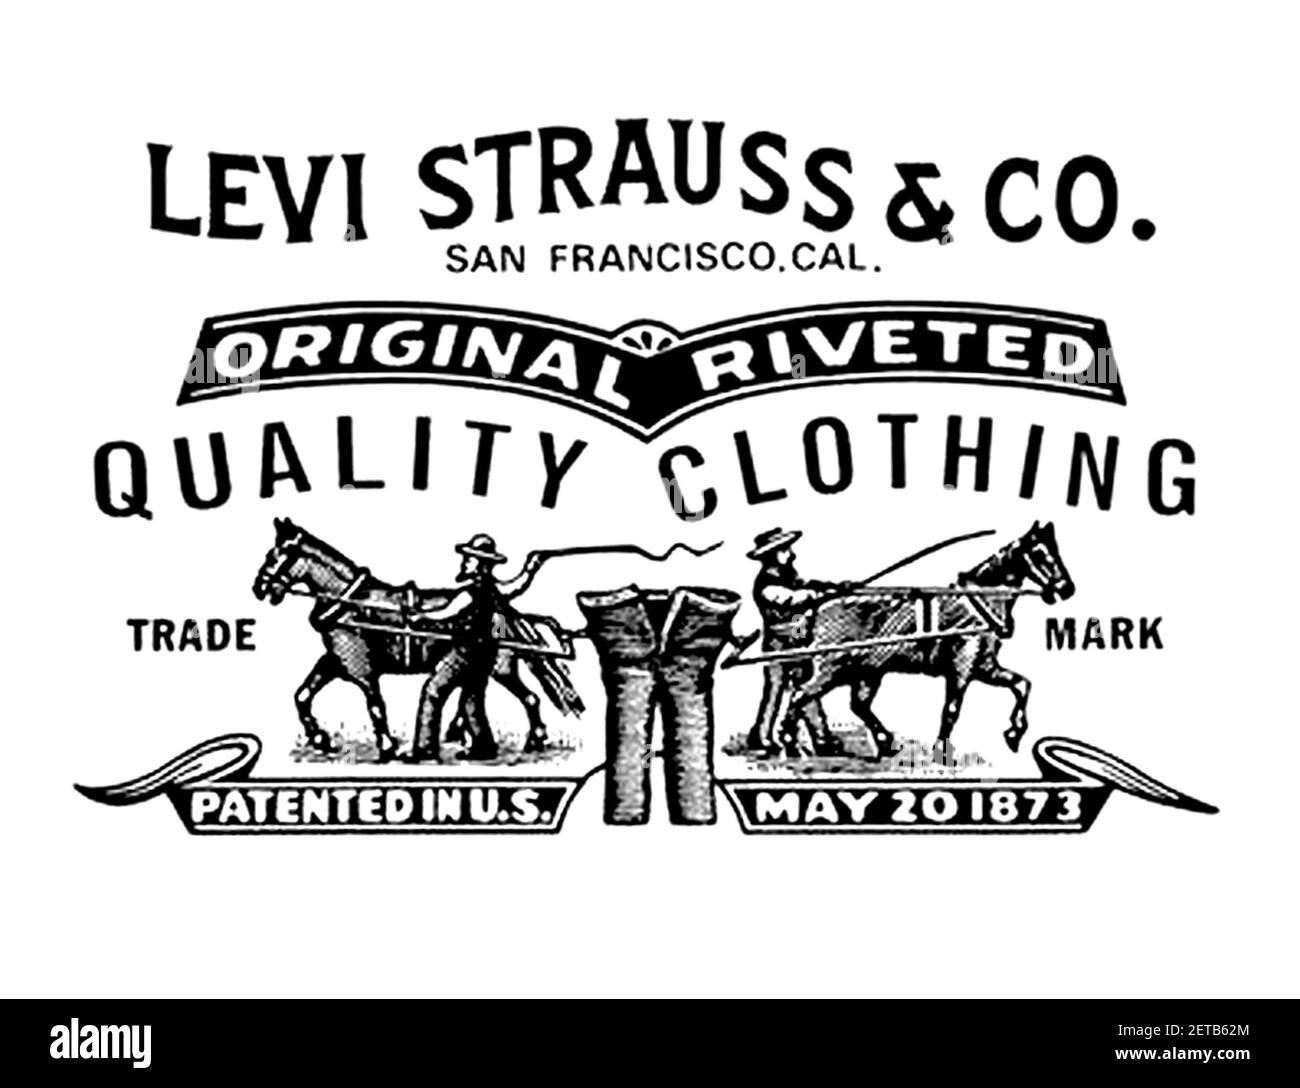 1900 C, USA : il creatore tedesco di JEANS BLU dans denim LEVI STRAUSS (  Löb Strauß , 1829 - 1902 ), uomo d'affari di Levi Strauss & Co. LOGO usato  su